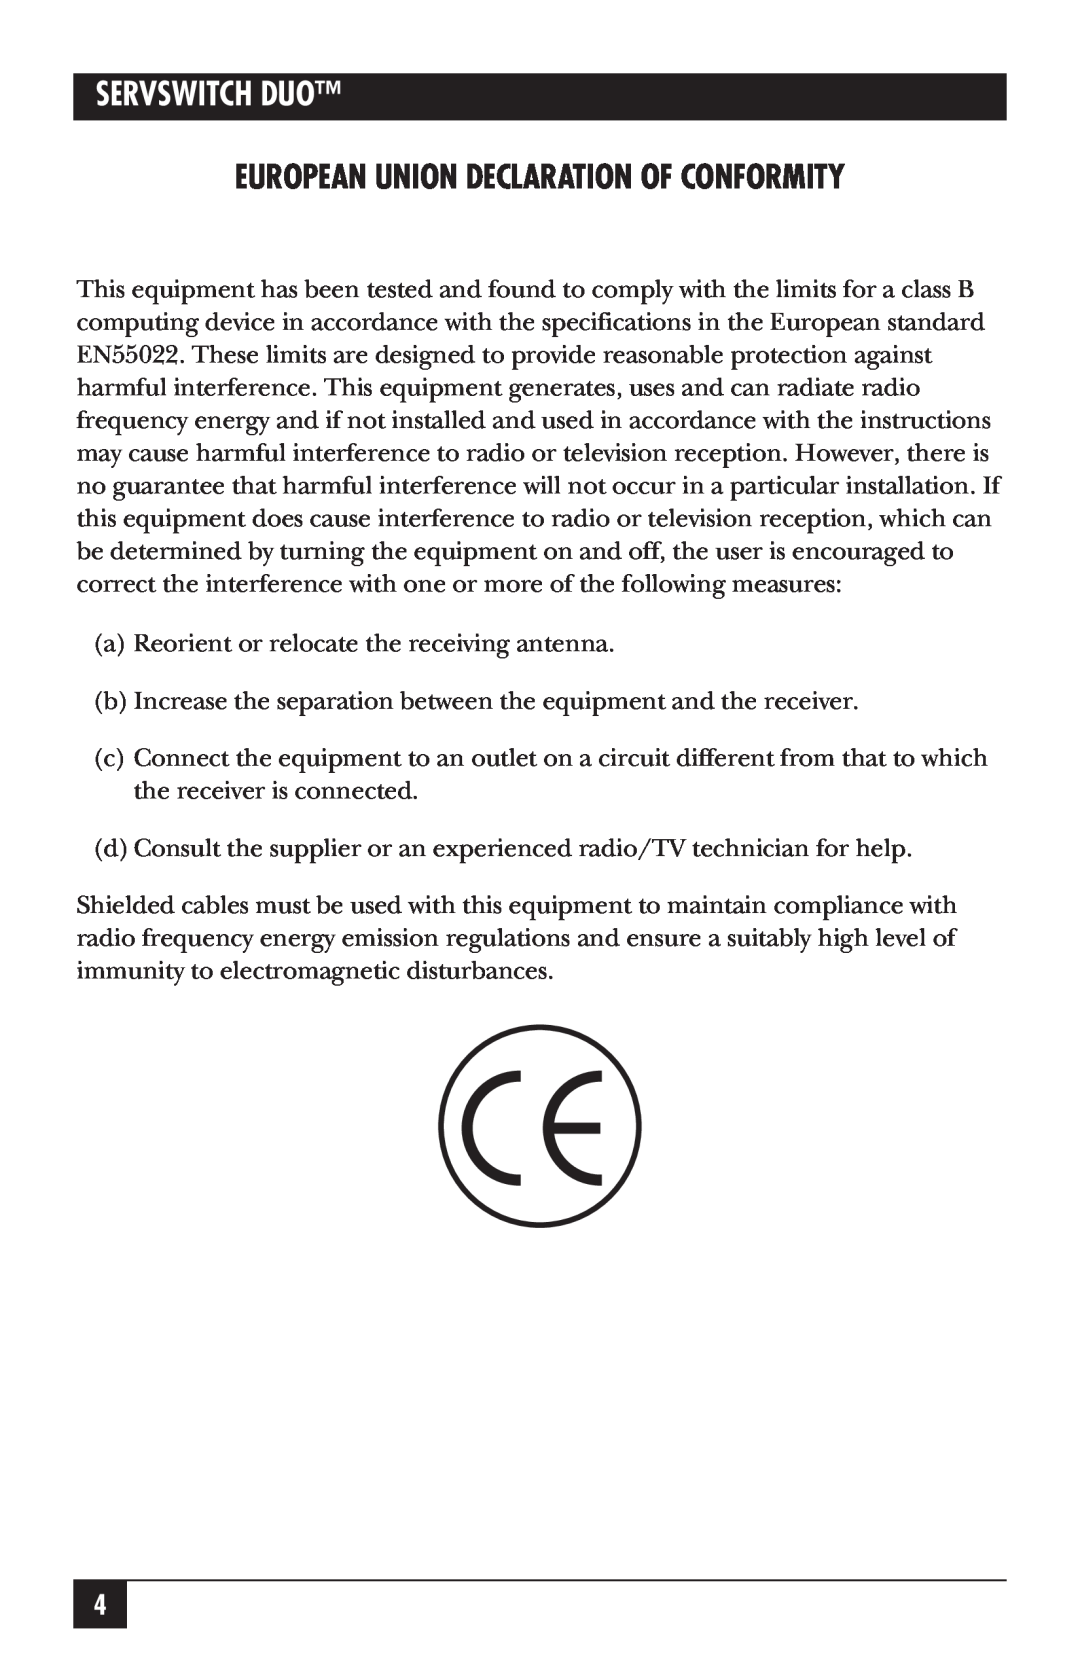 Black Box KV6104SA manual European Union Declaration Of Conformity, Servswitch Duo 